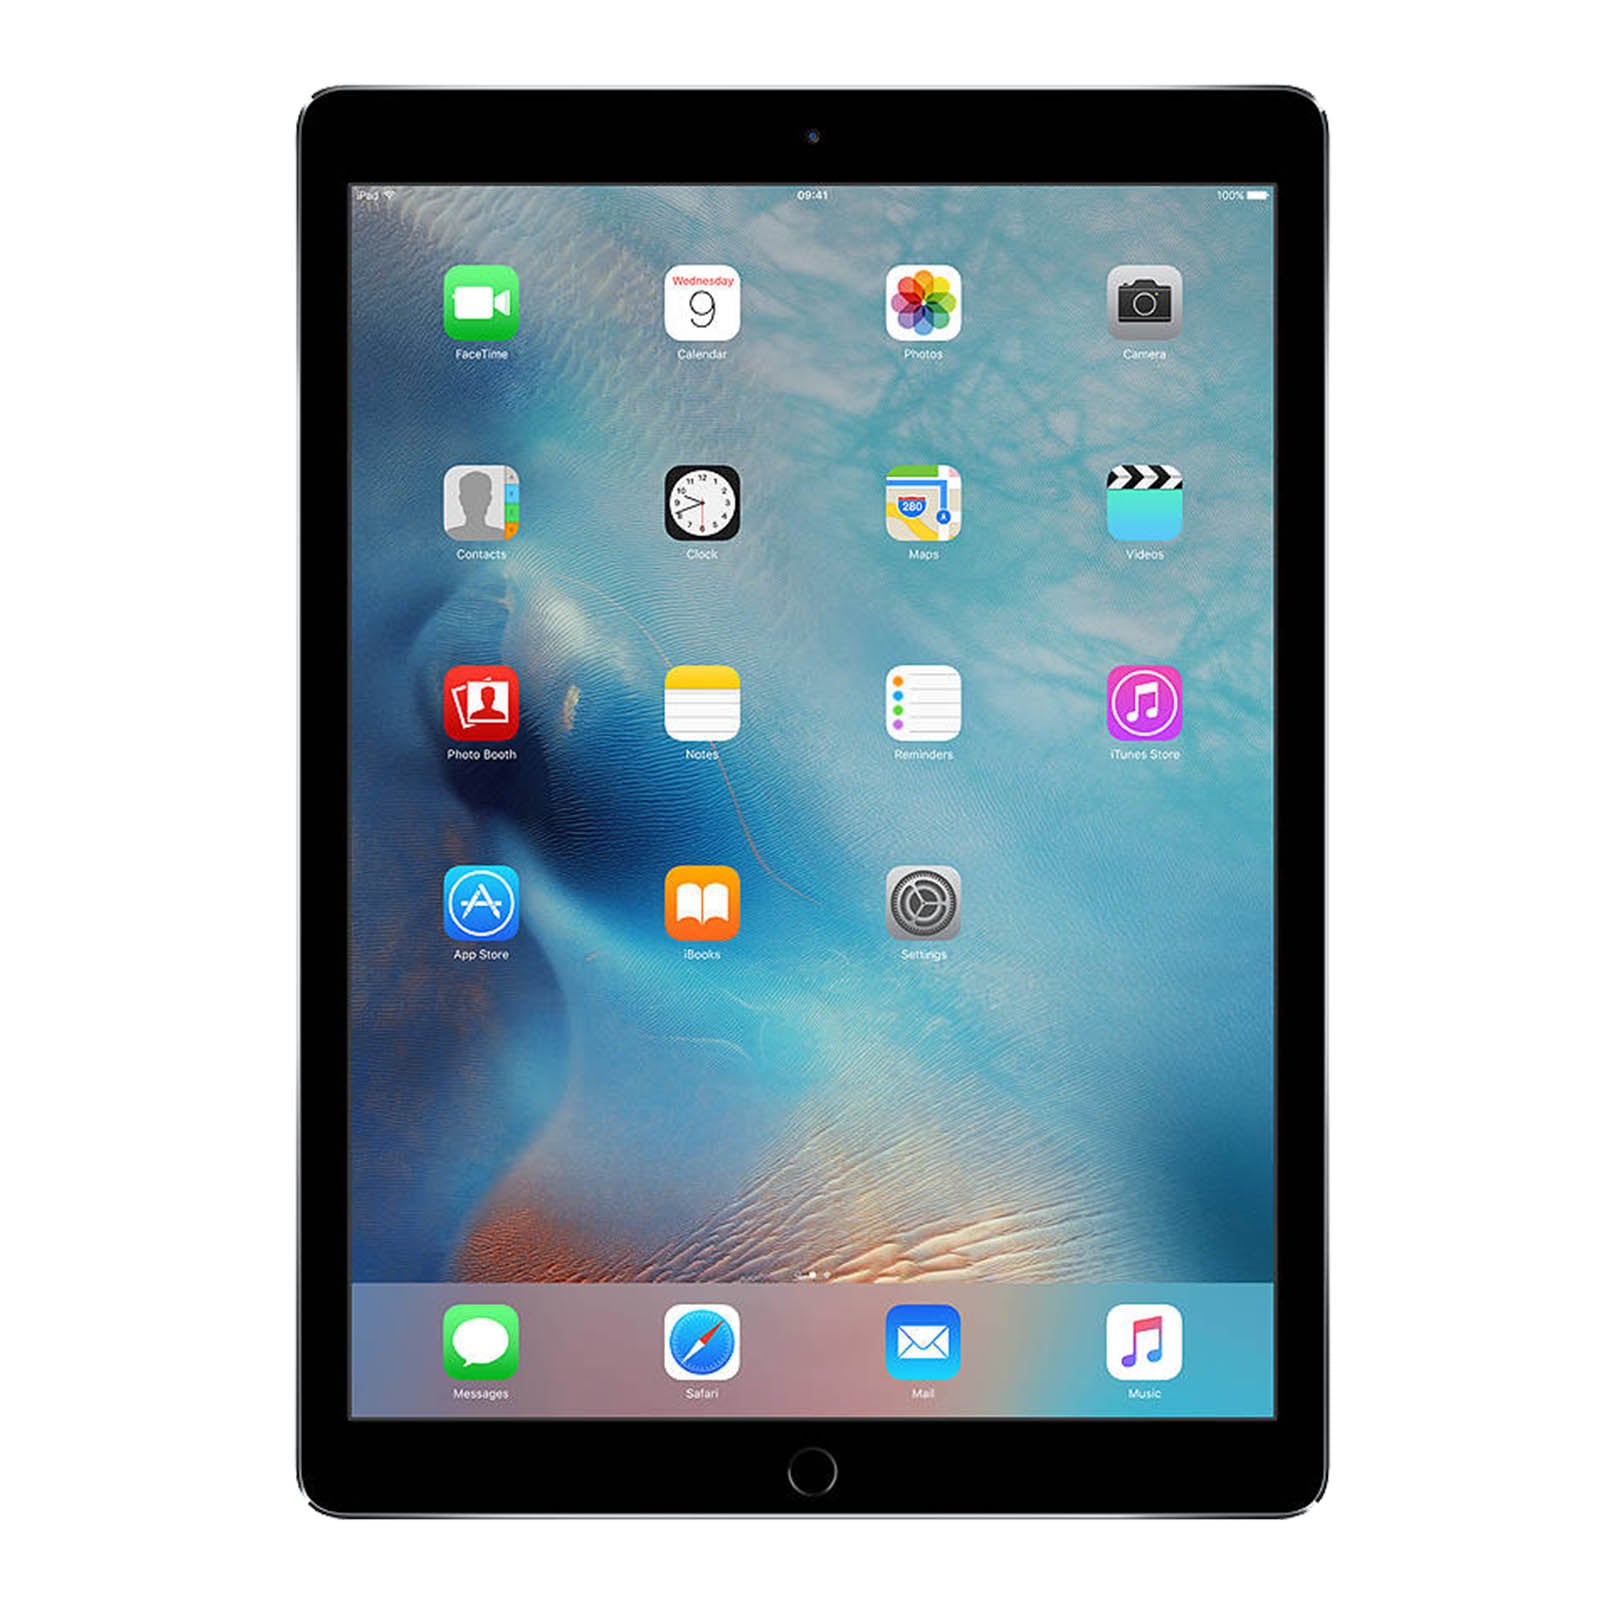 iPad Pro 12.9 Inch 1st Gen 256GB Space Grey Good - WiFi